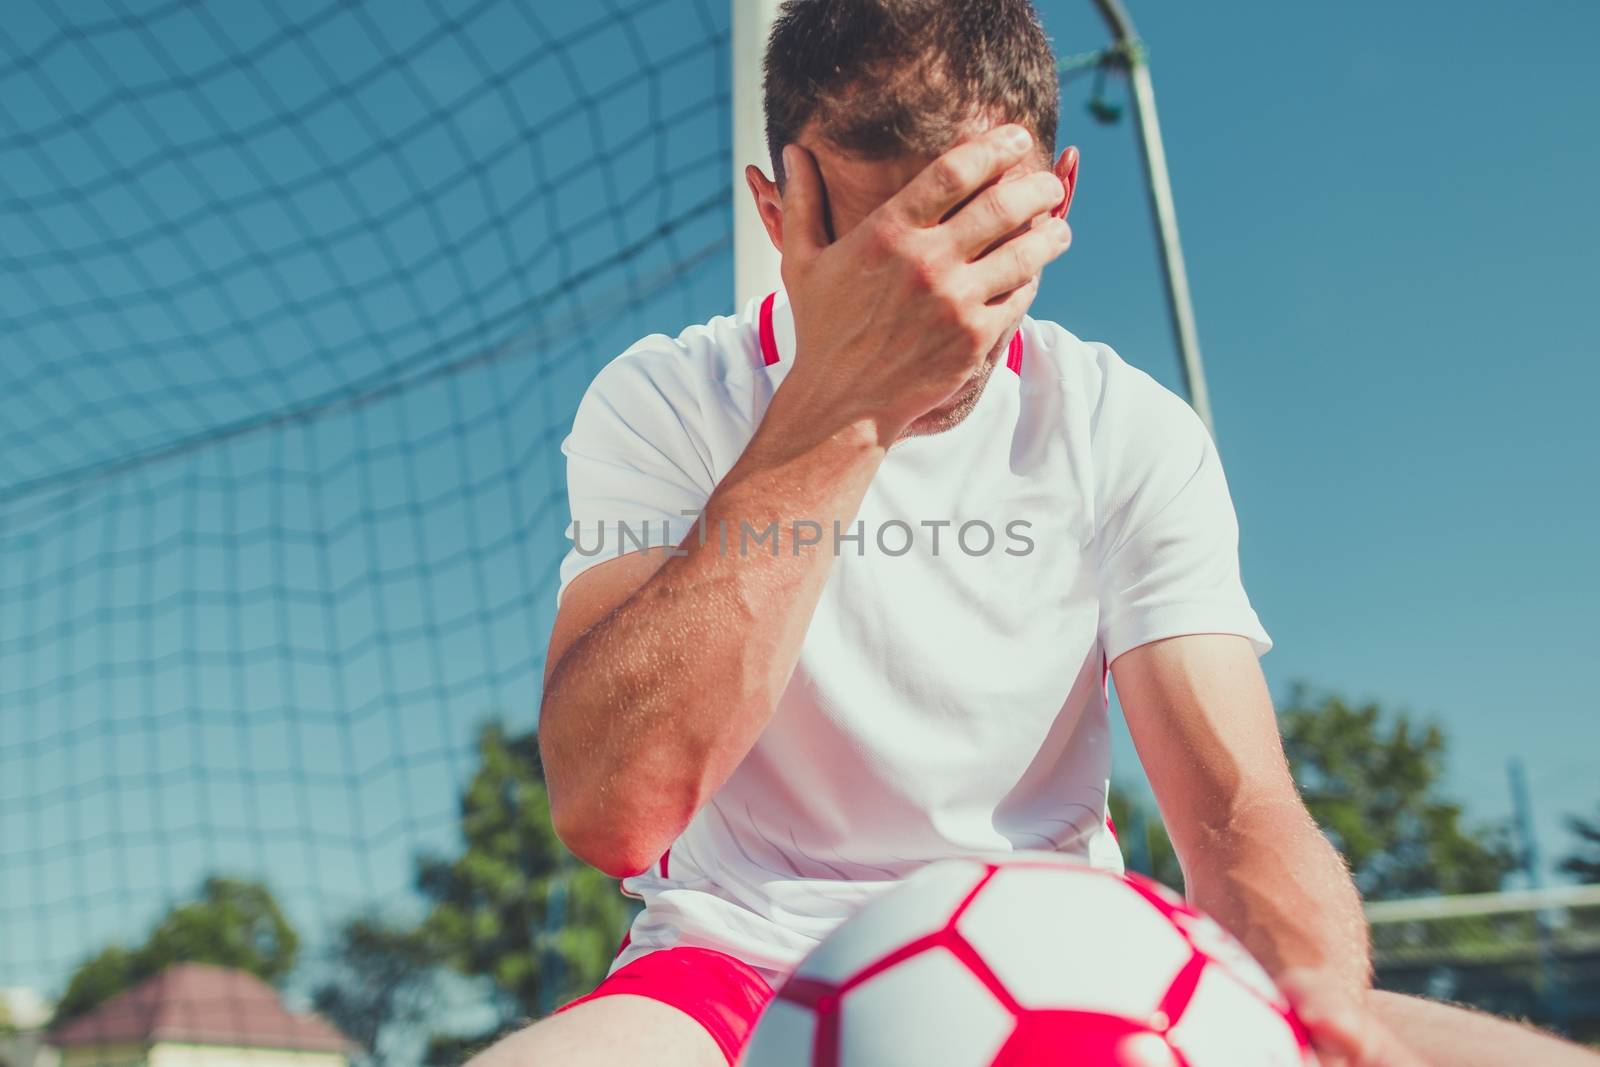 Soccer Fan Frustration by welcomia